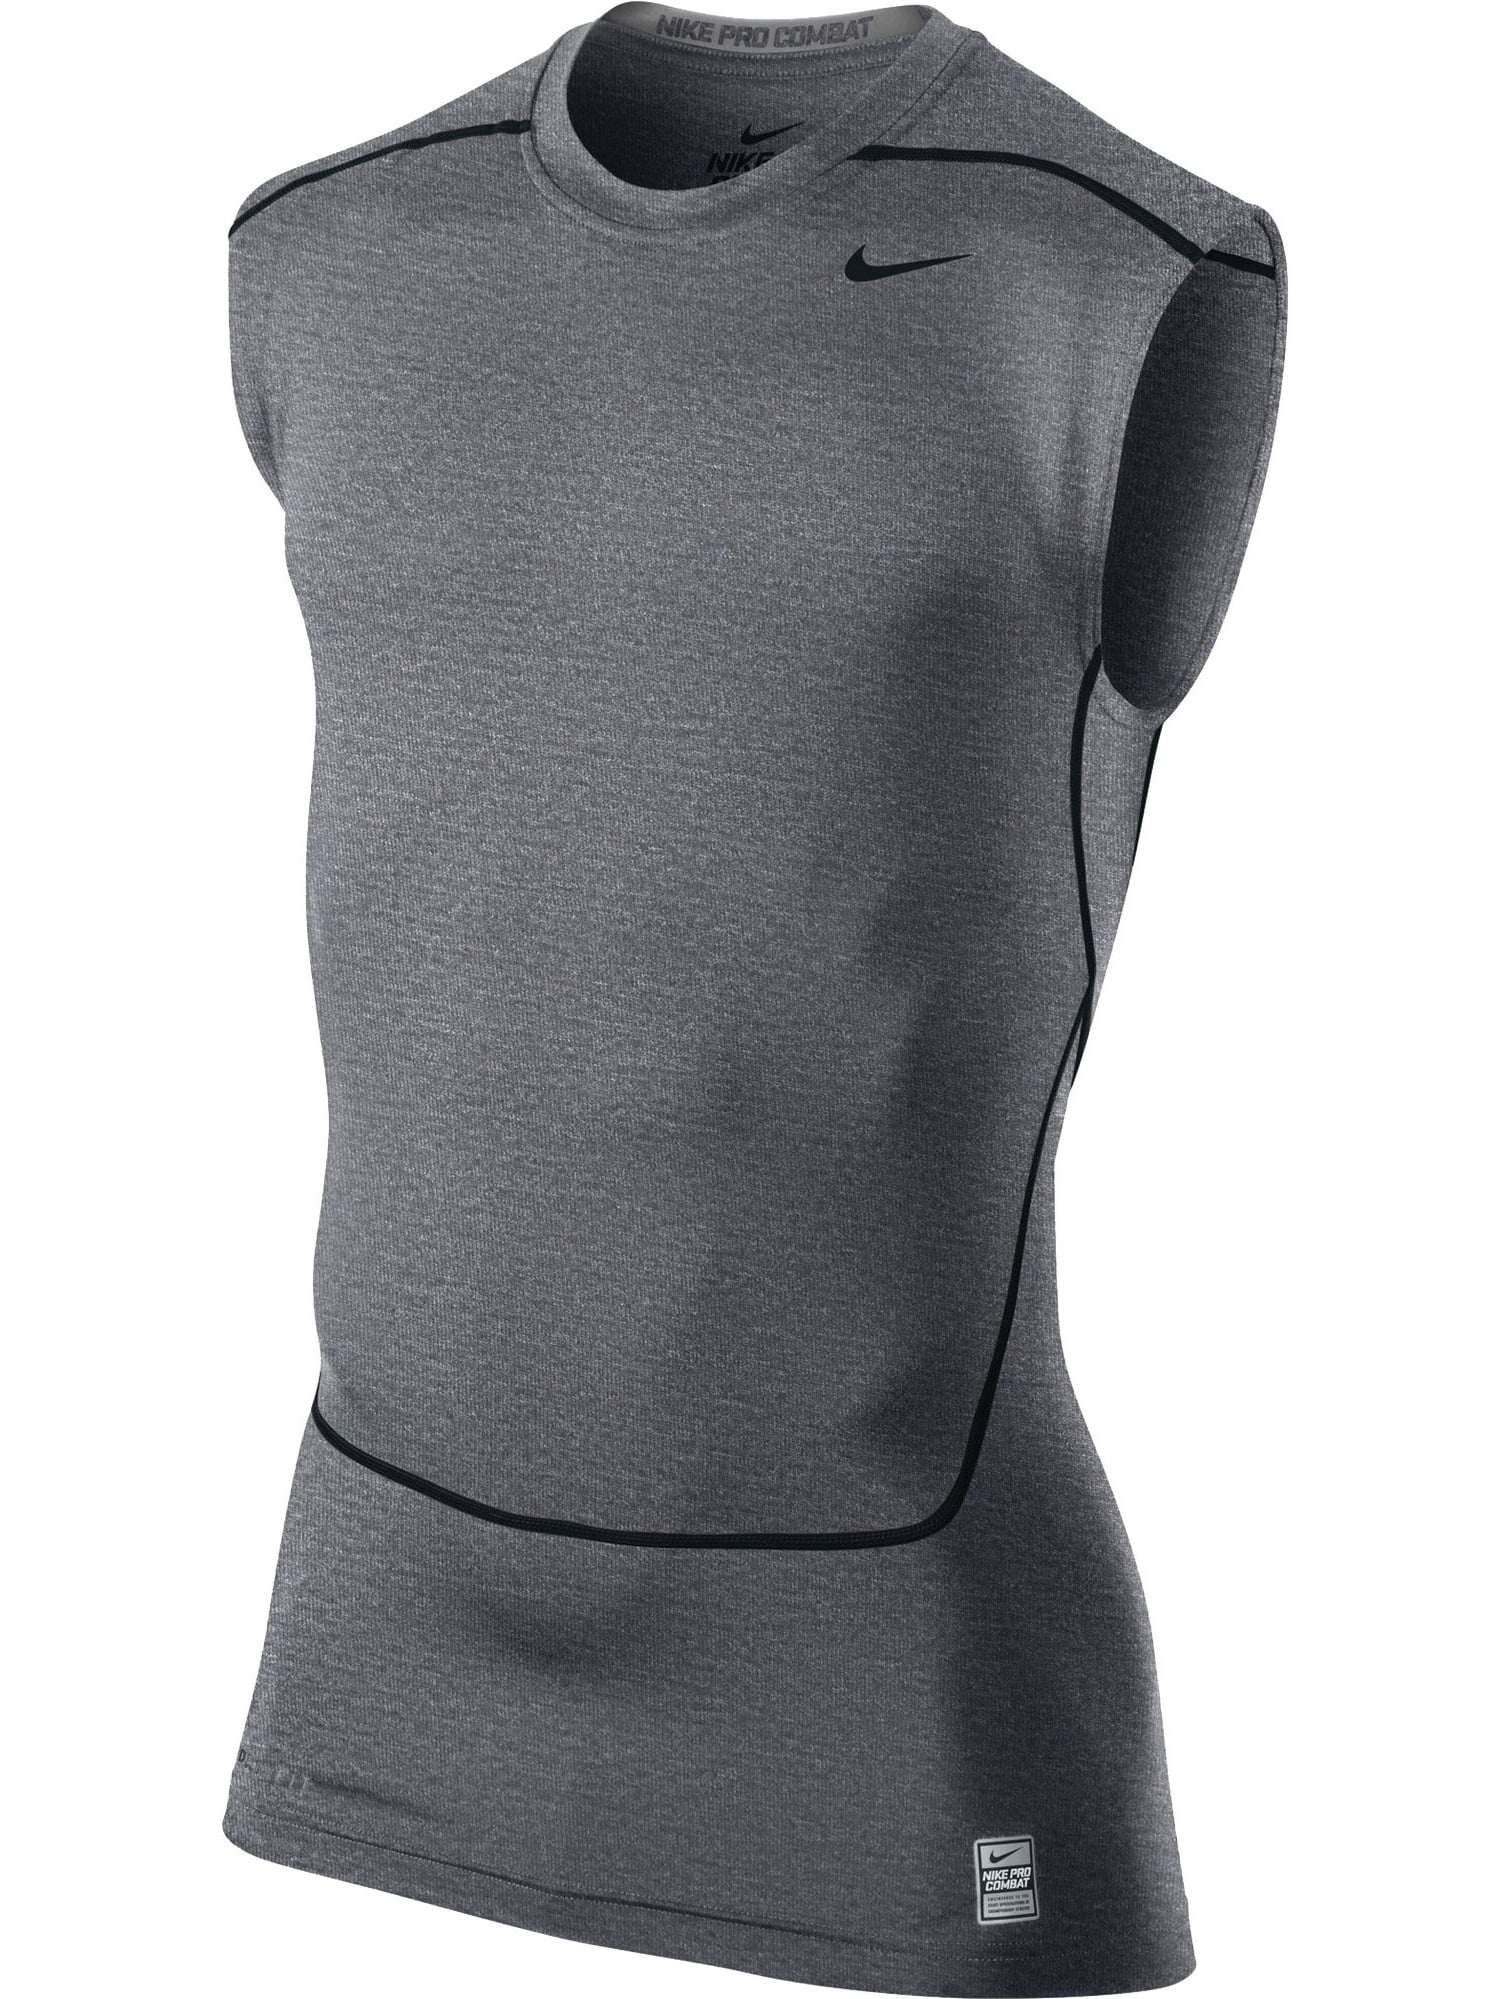 Nike Men's Core Compression Training Shirt - Walmart.com